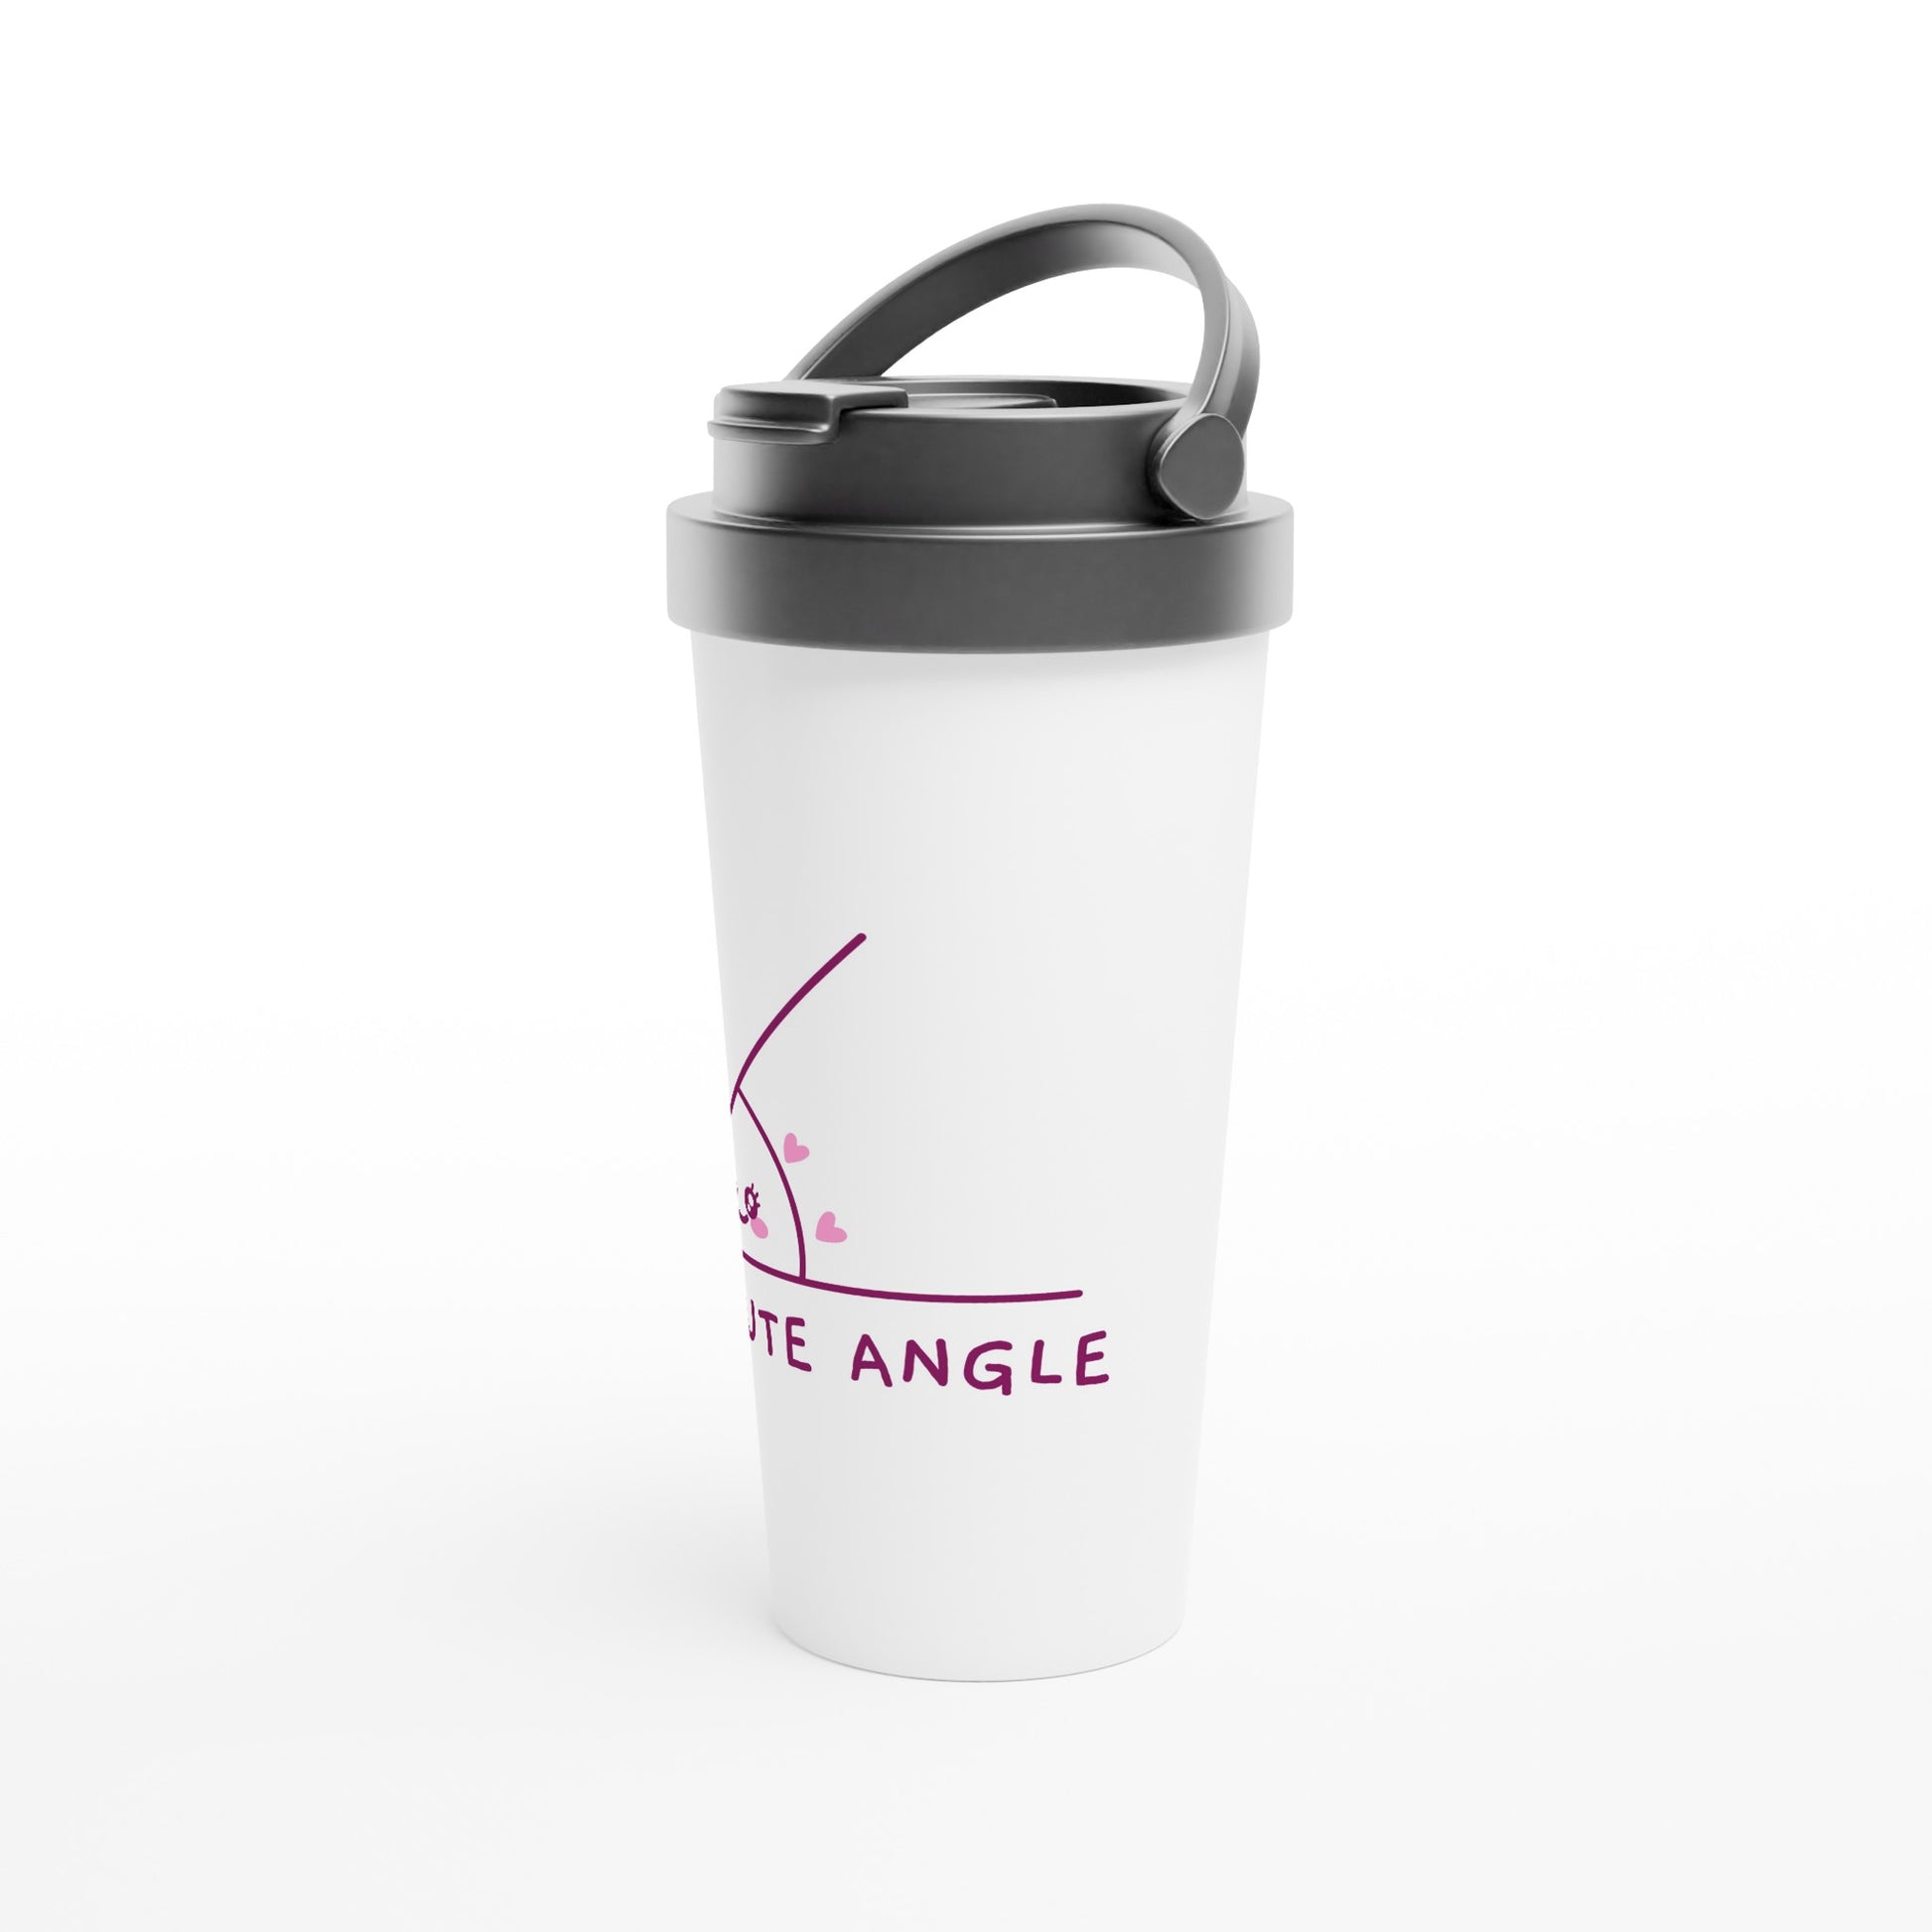 A-Cute Angle - White 15oz Stainless Steel Travel Mug Travel Mug Maths